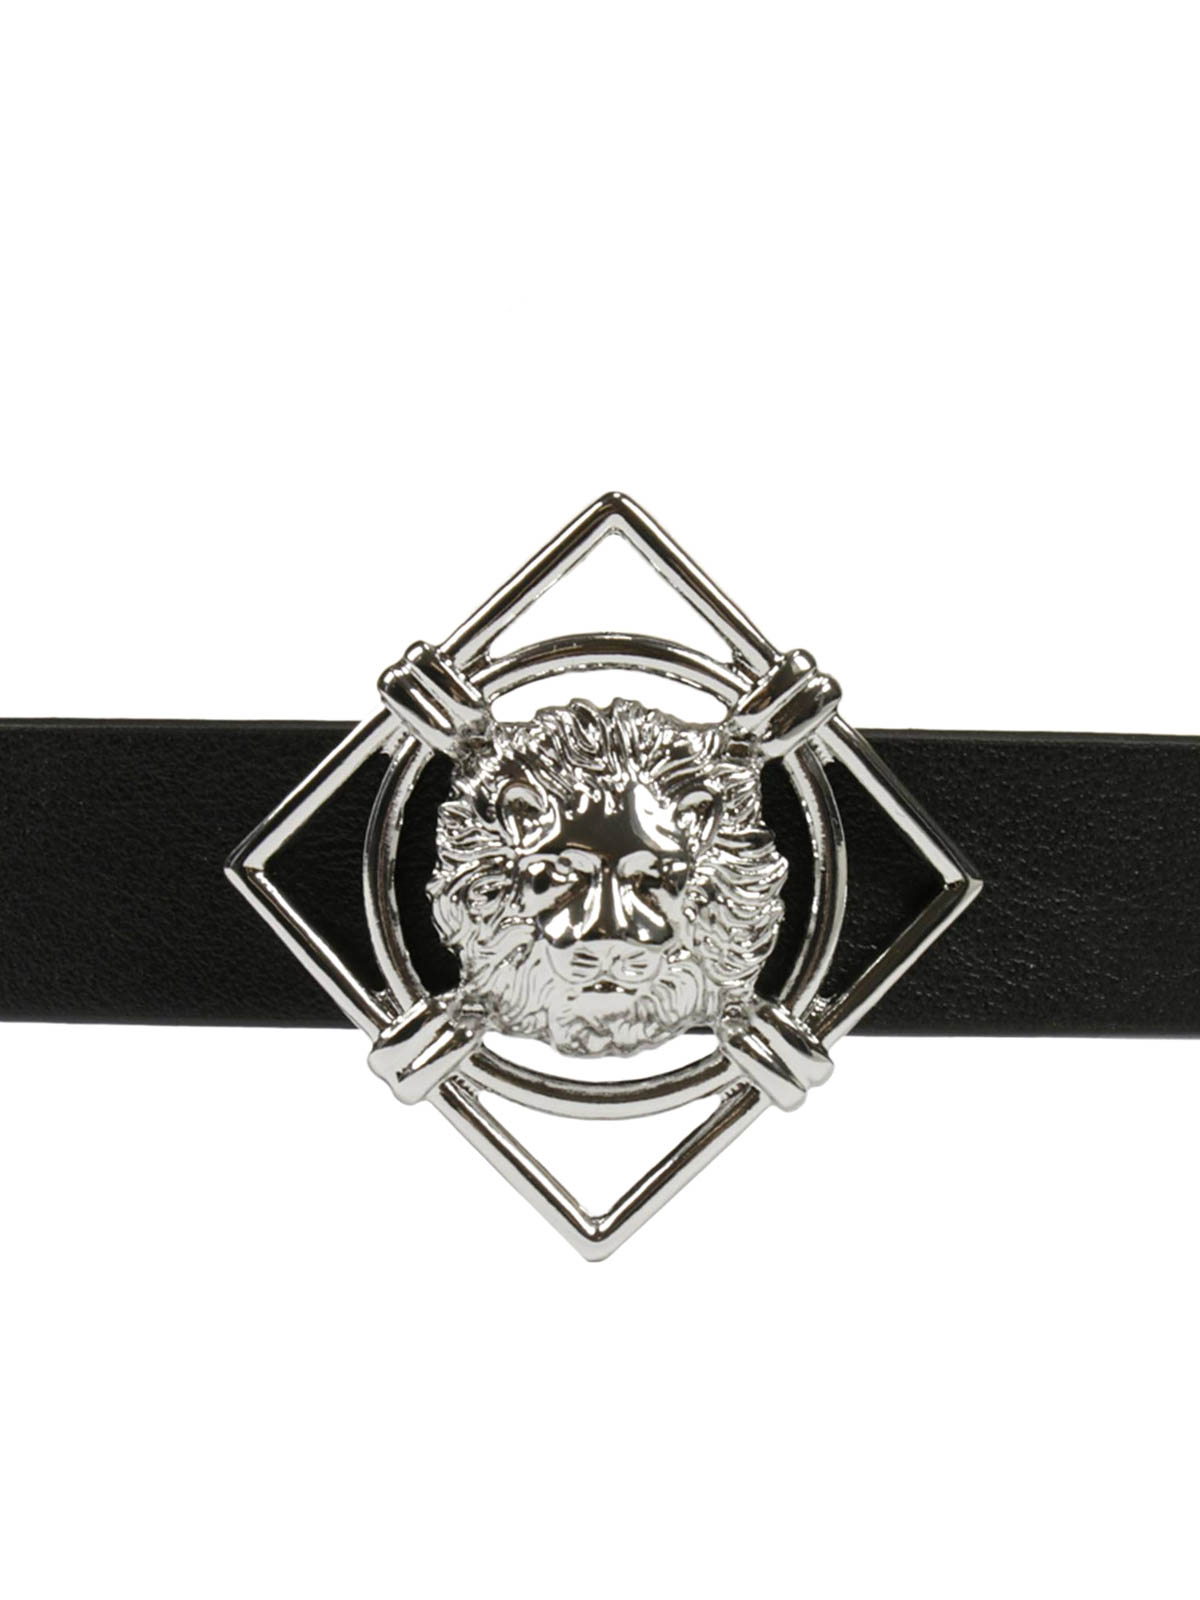 Versus Versace - Leather bracelet with 